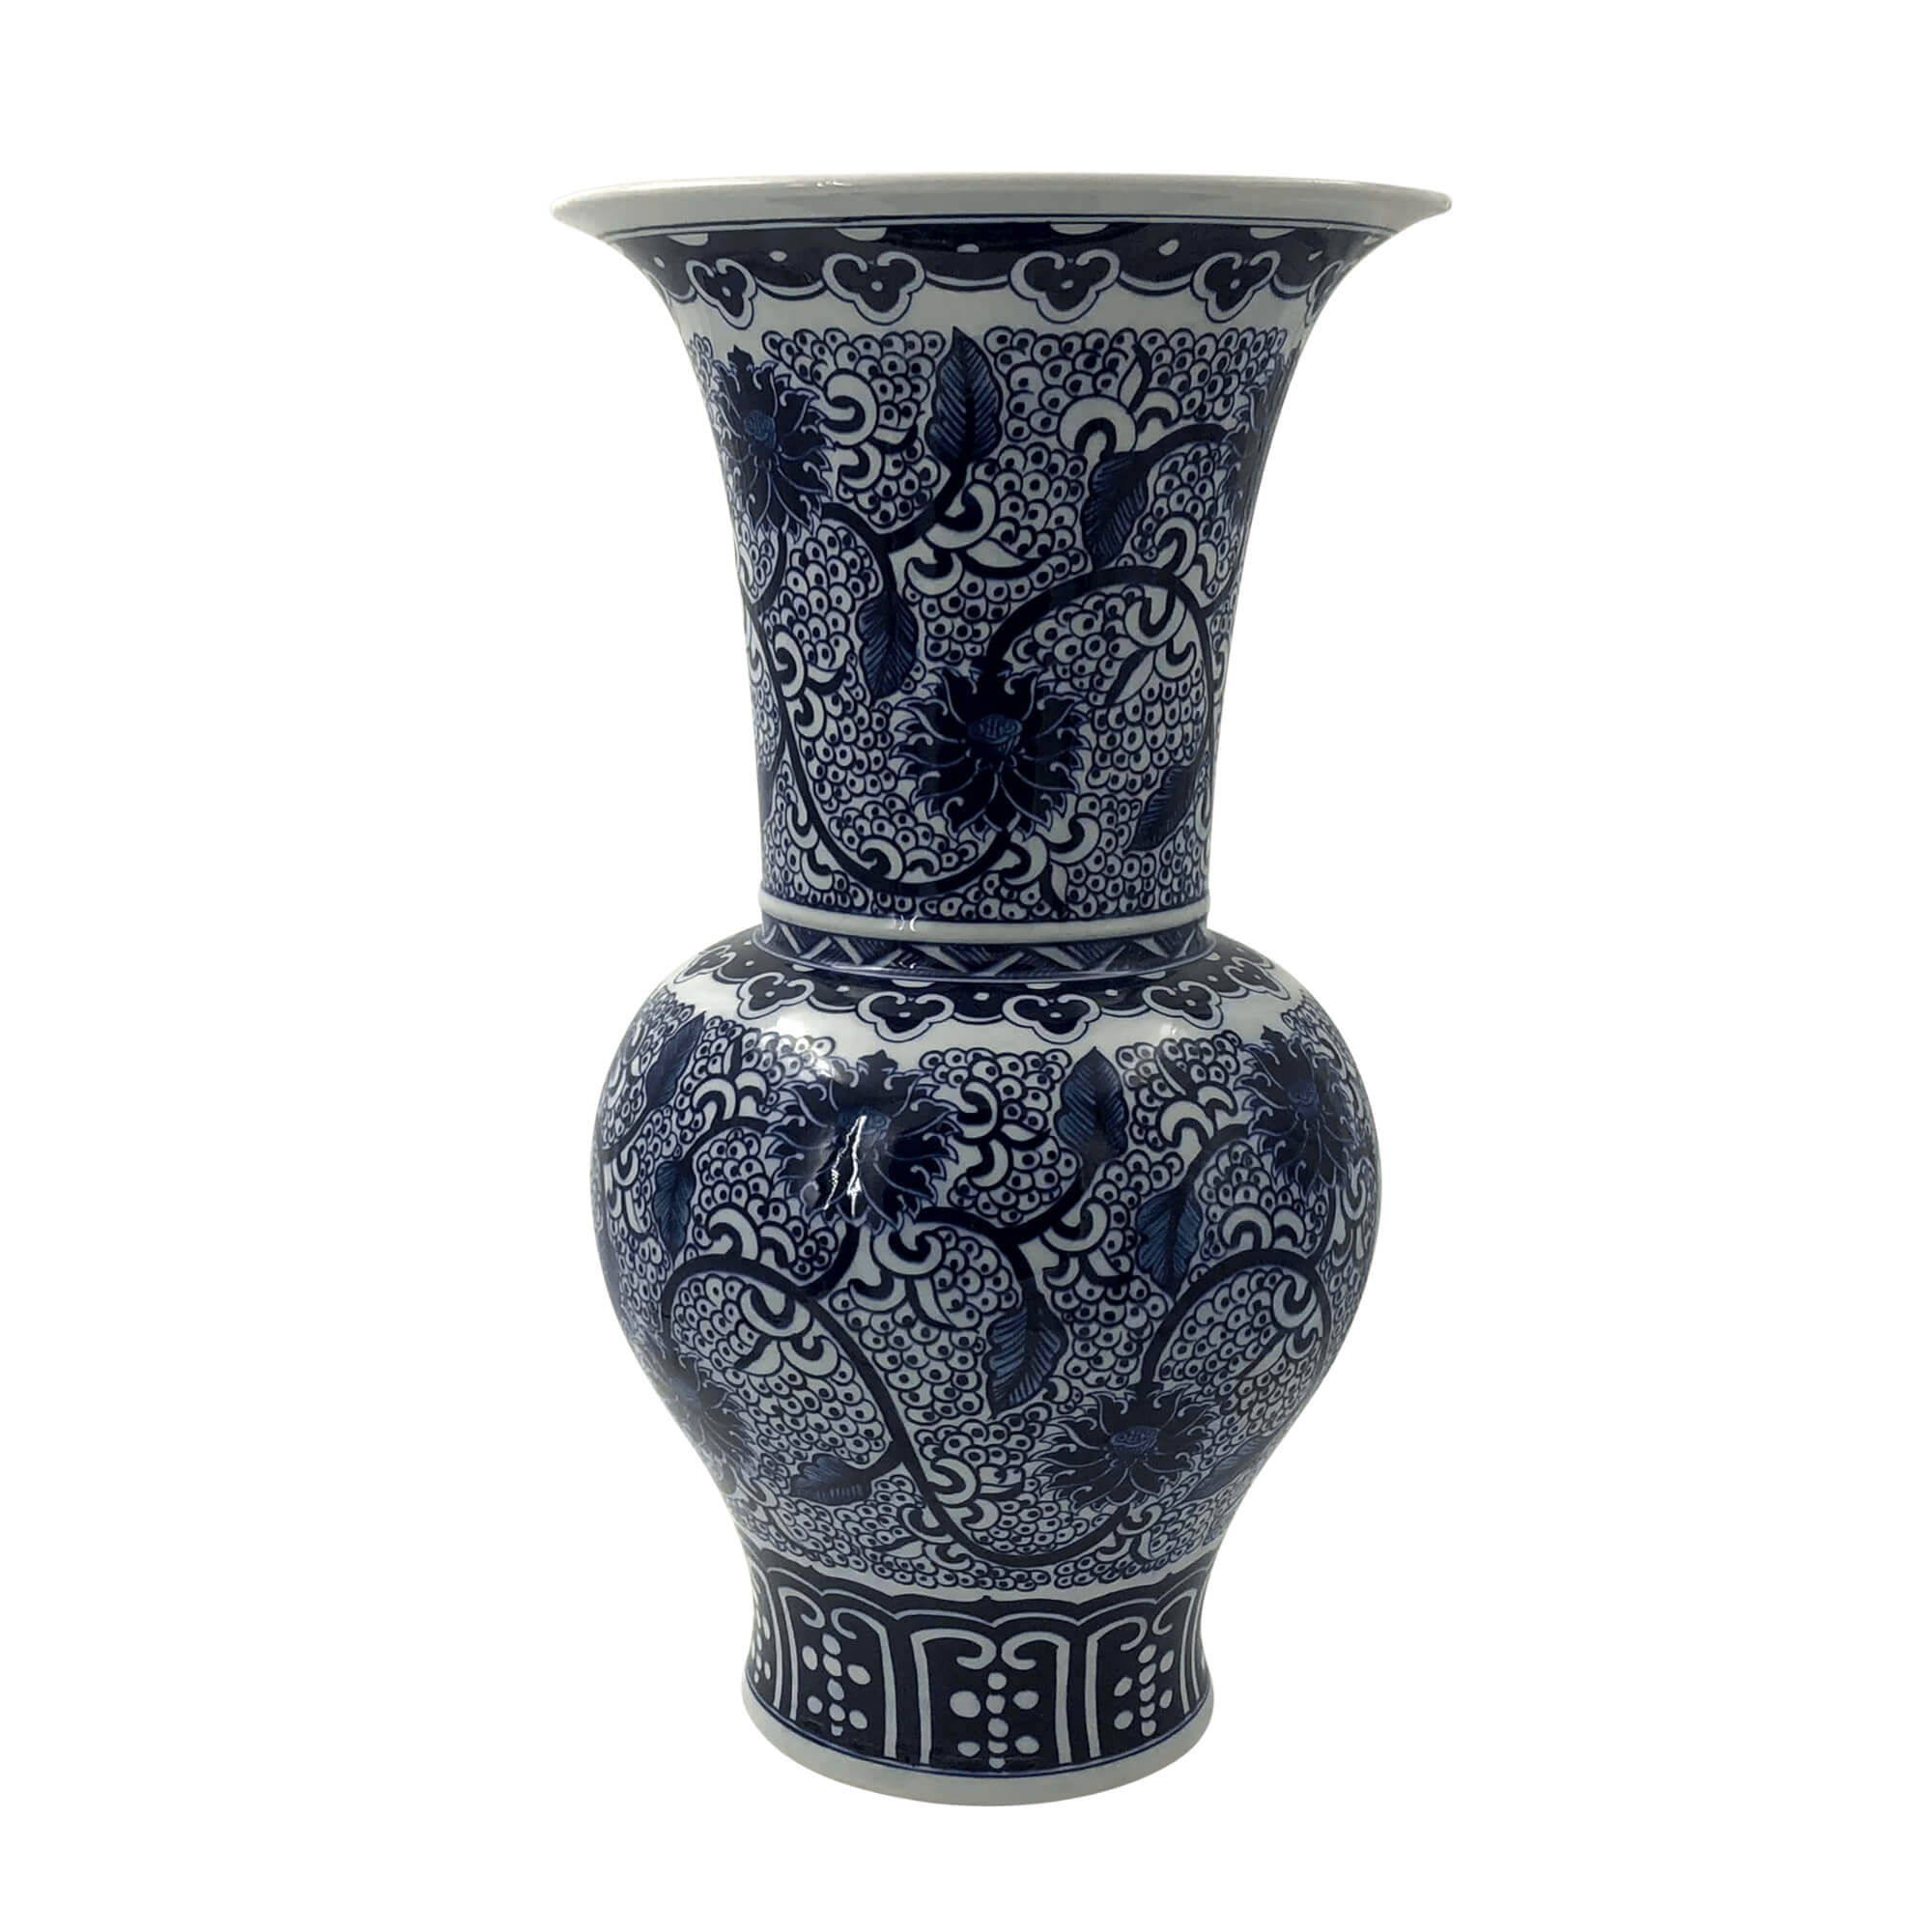 Pair of Hand Painted Chinese Export Flower Vases - English Georgian America